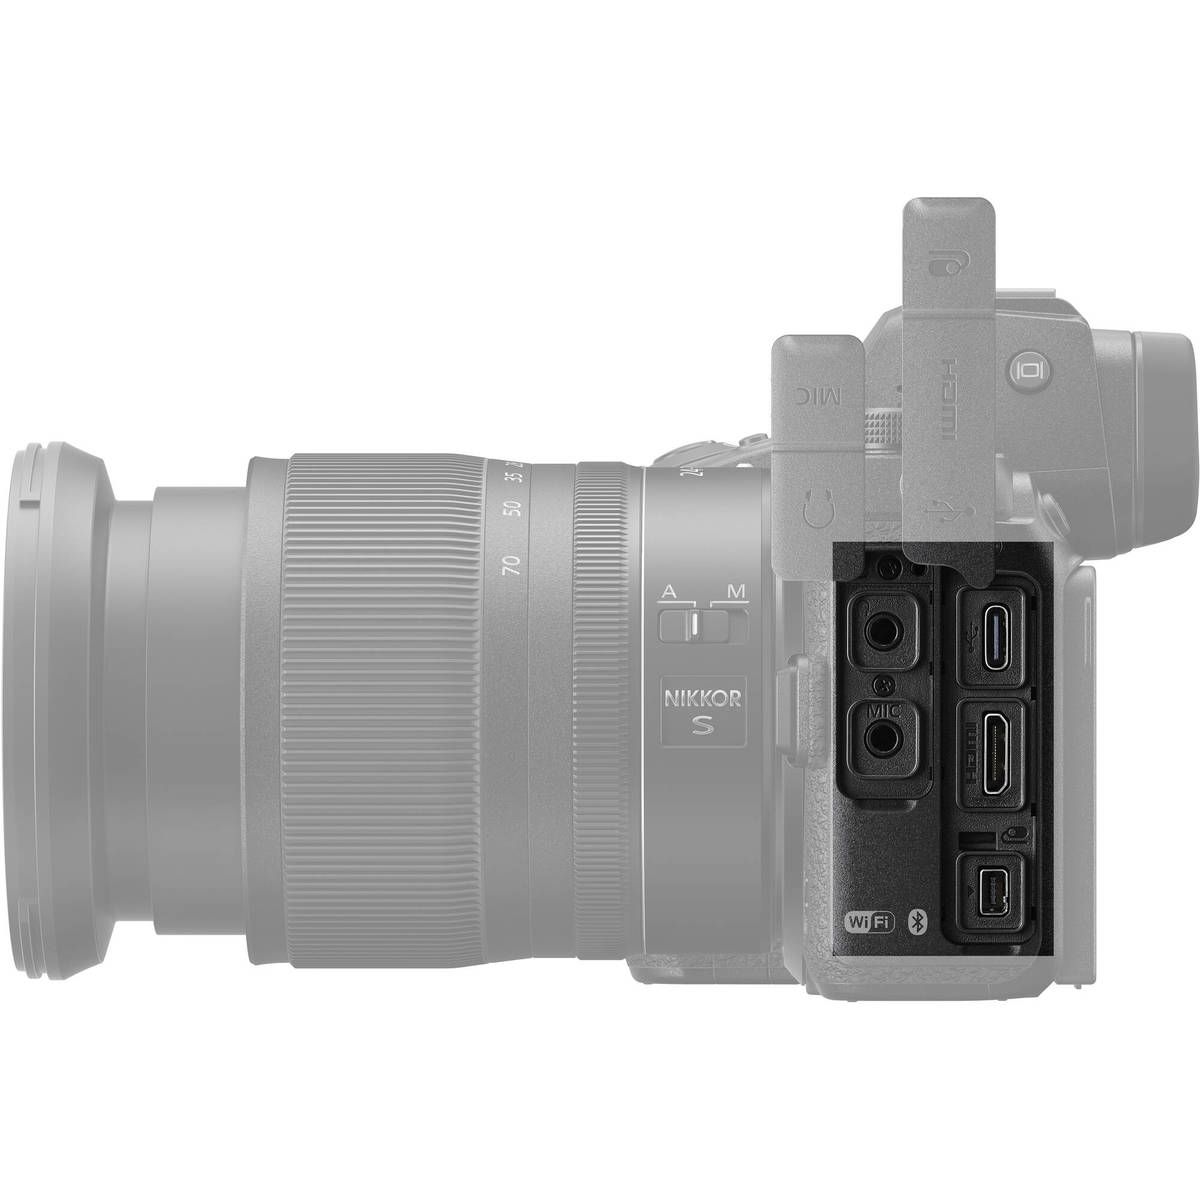 4. Nikon Z7 II Kit (24-70 F4 S) (with adapter)